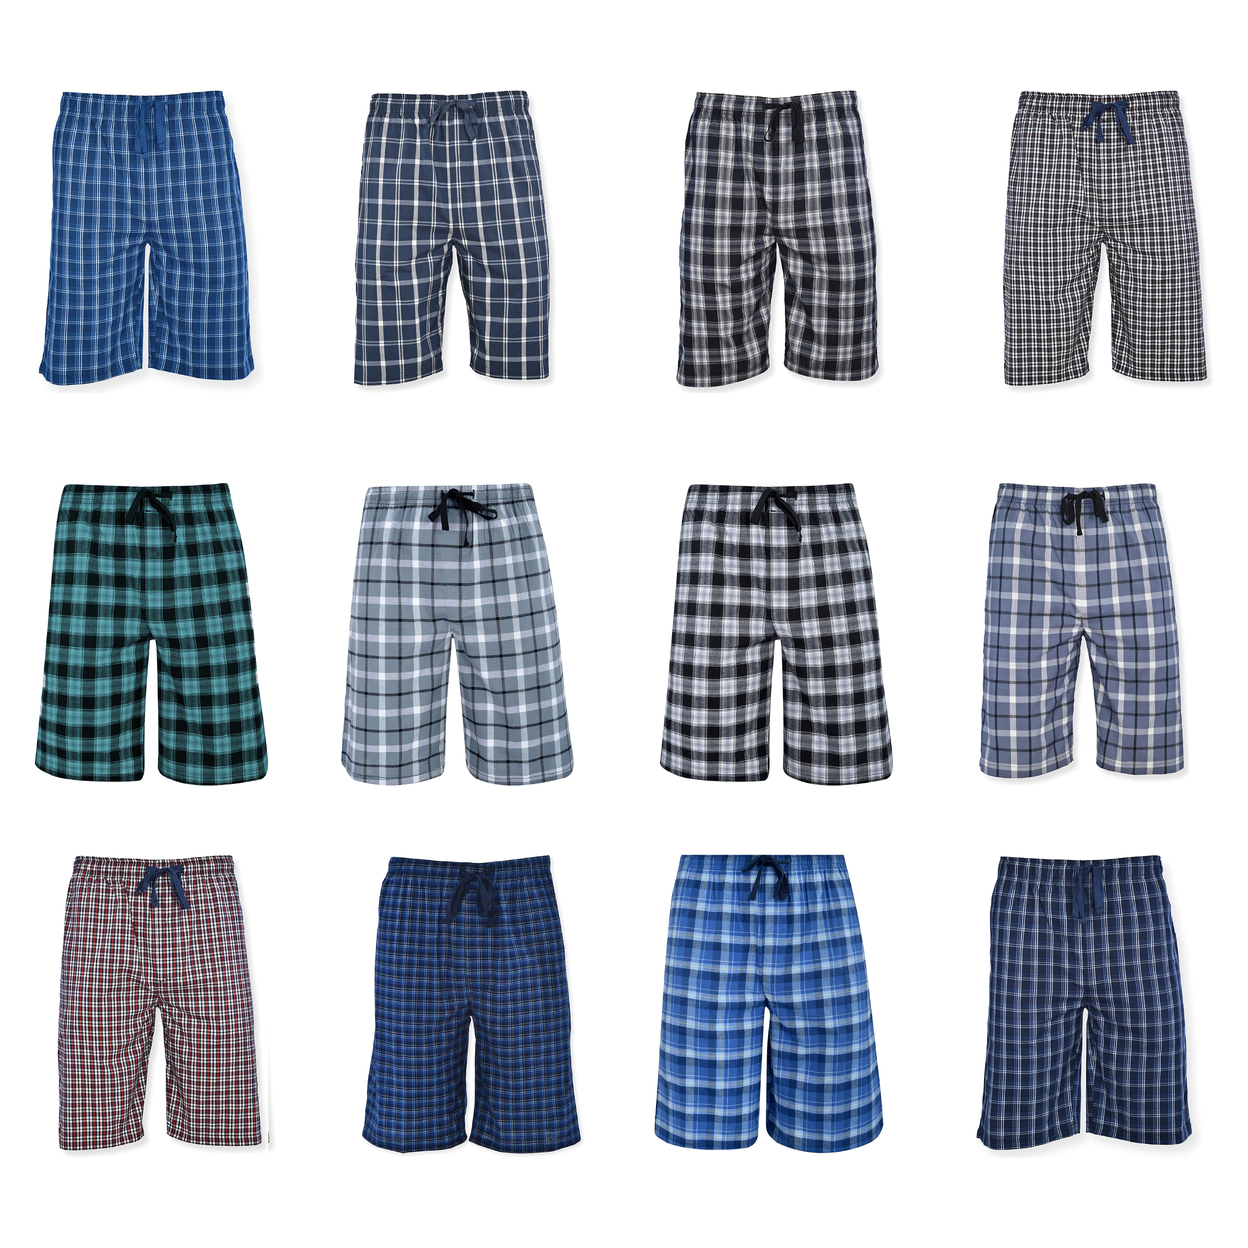 5-Pack: Men's Ultra Soft Plaid Lounge Pajama Sleep Wear Shorts - Small